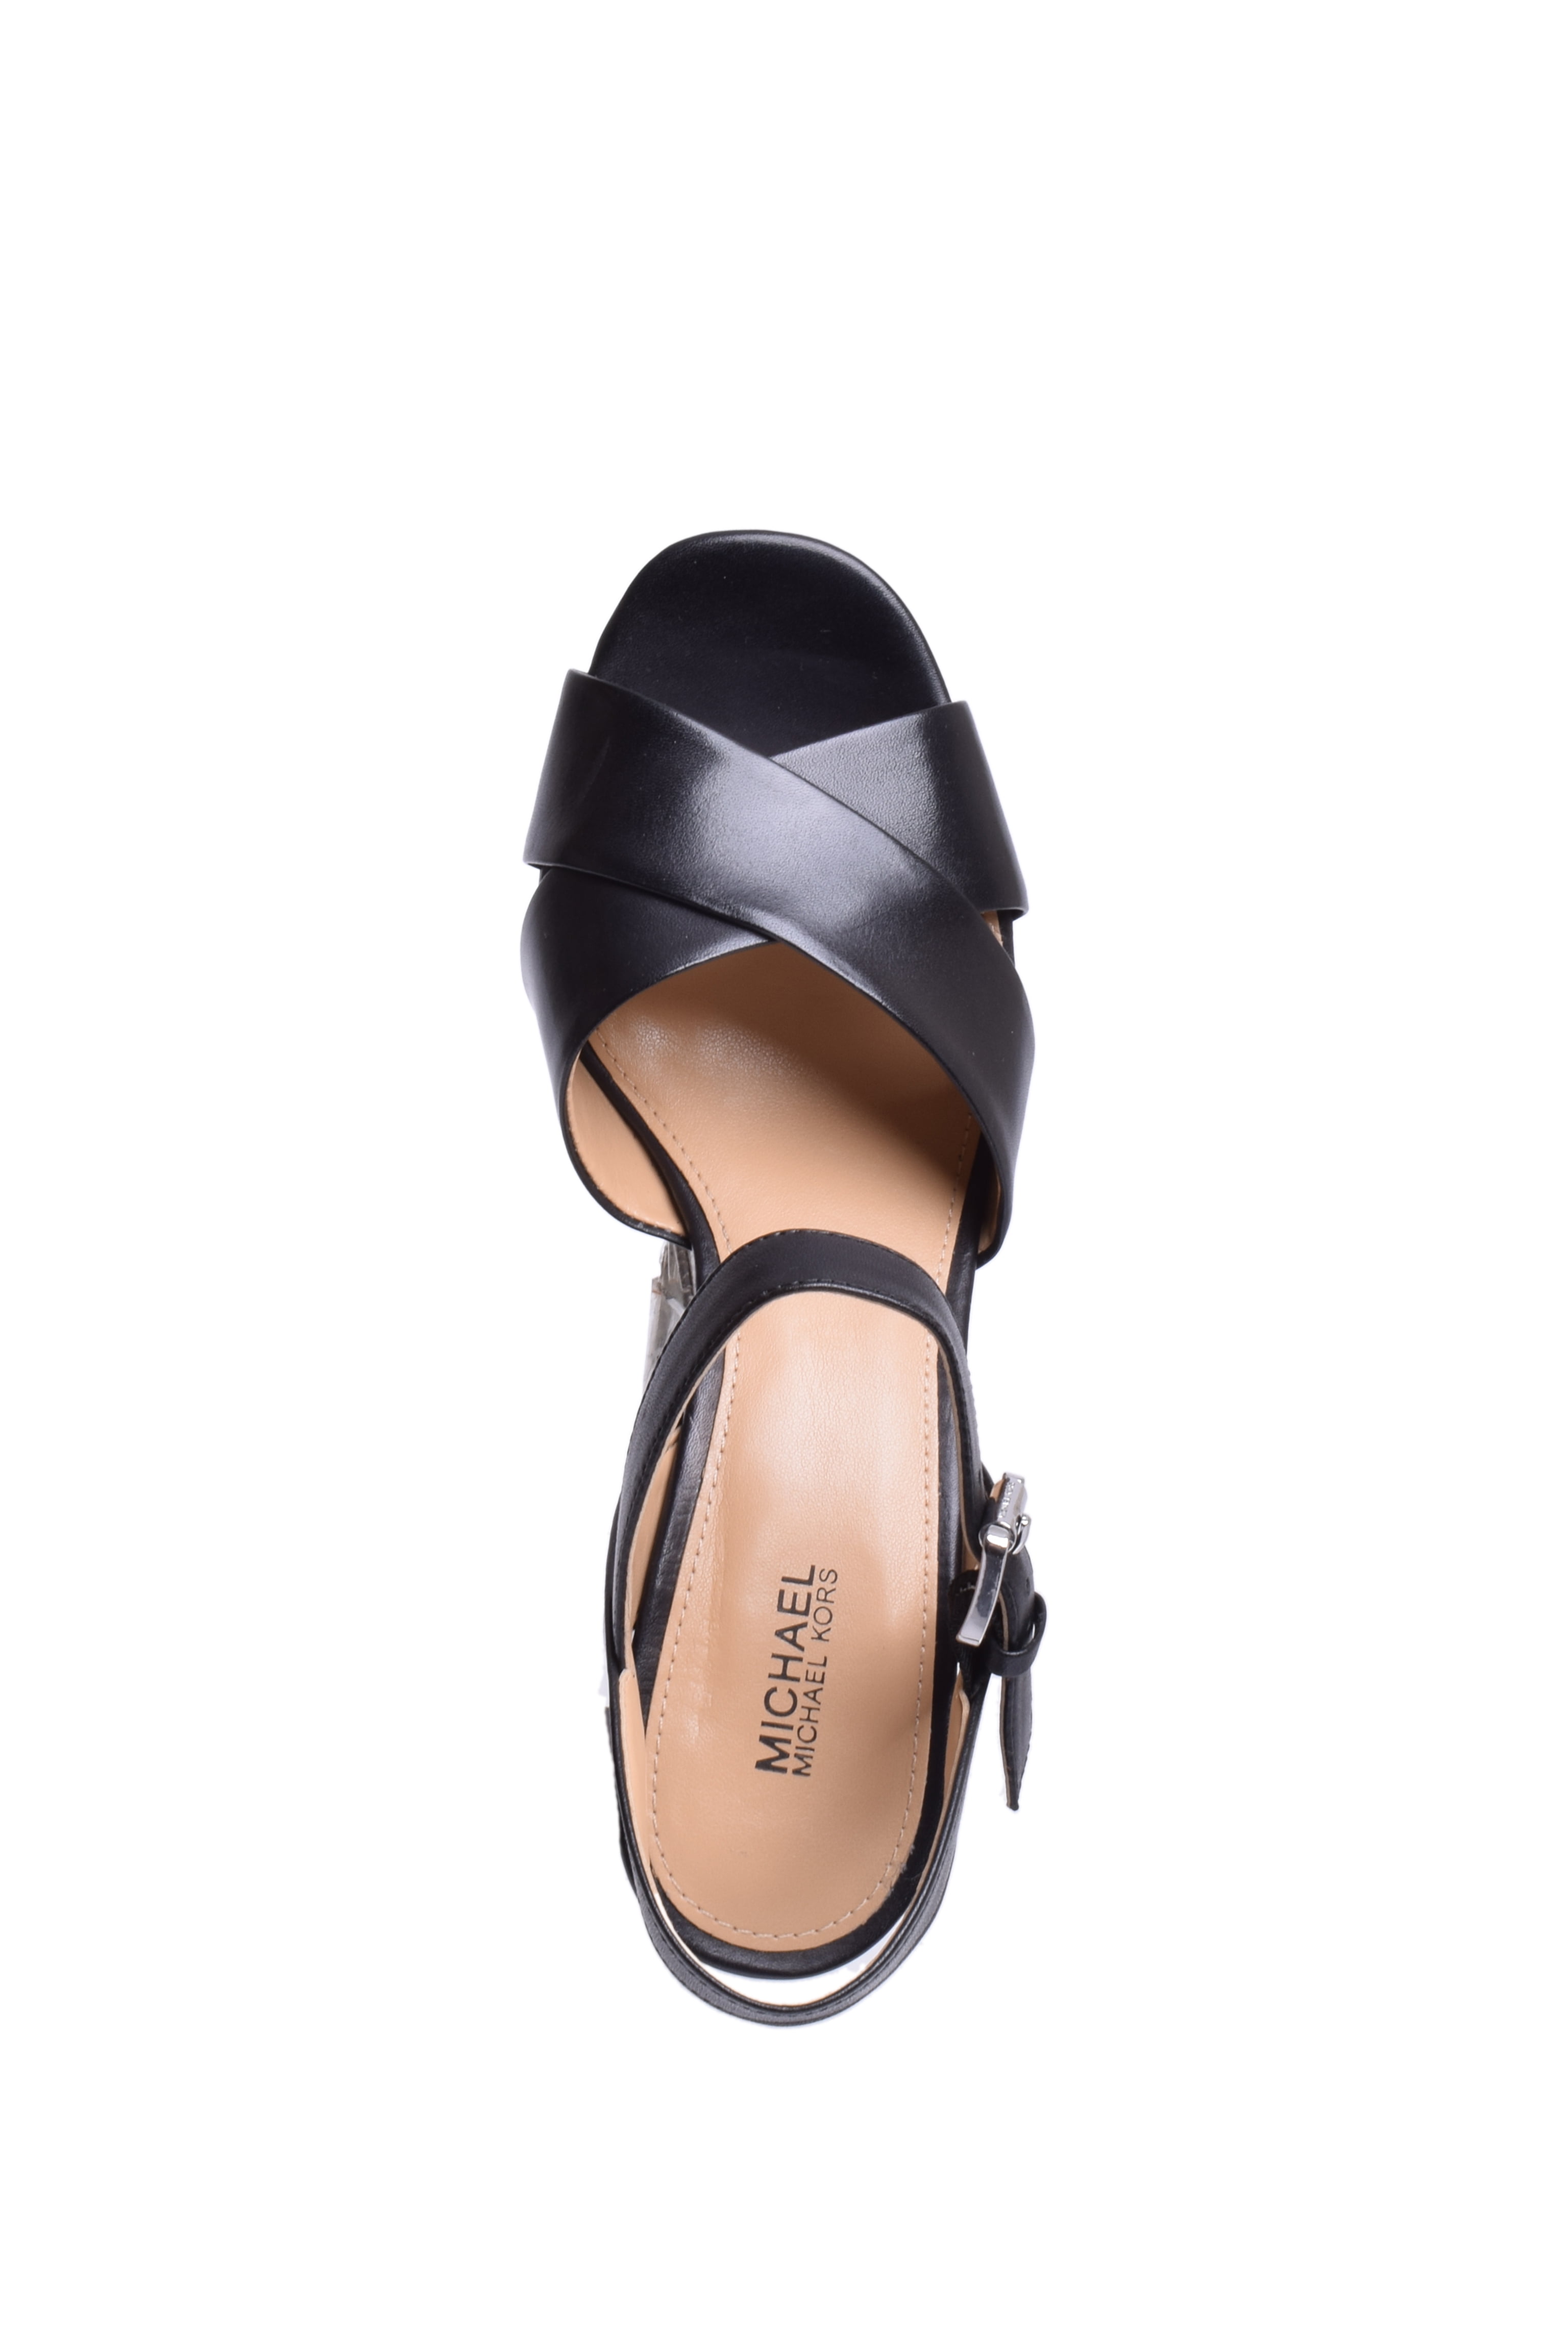 Sandals Michael Kors  Divia leather wedge sandals  40S8DVMS1L001